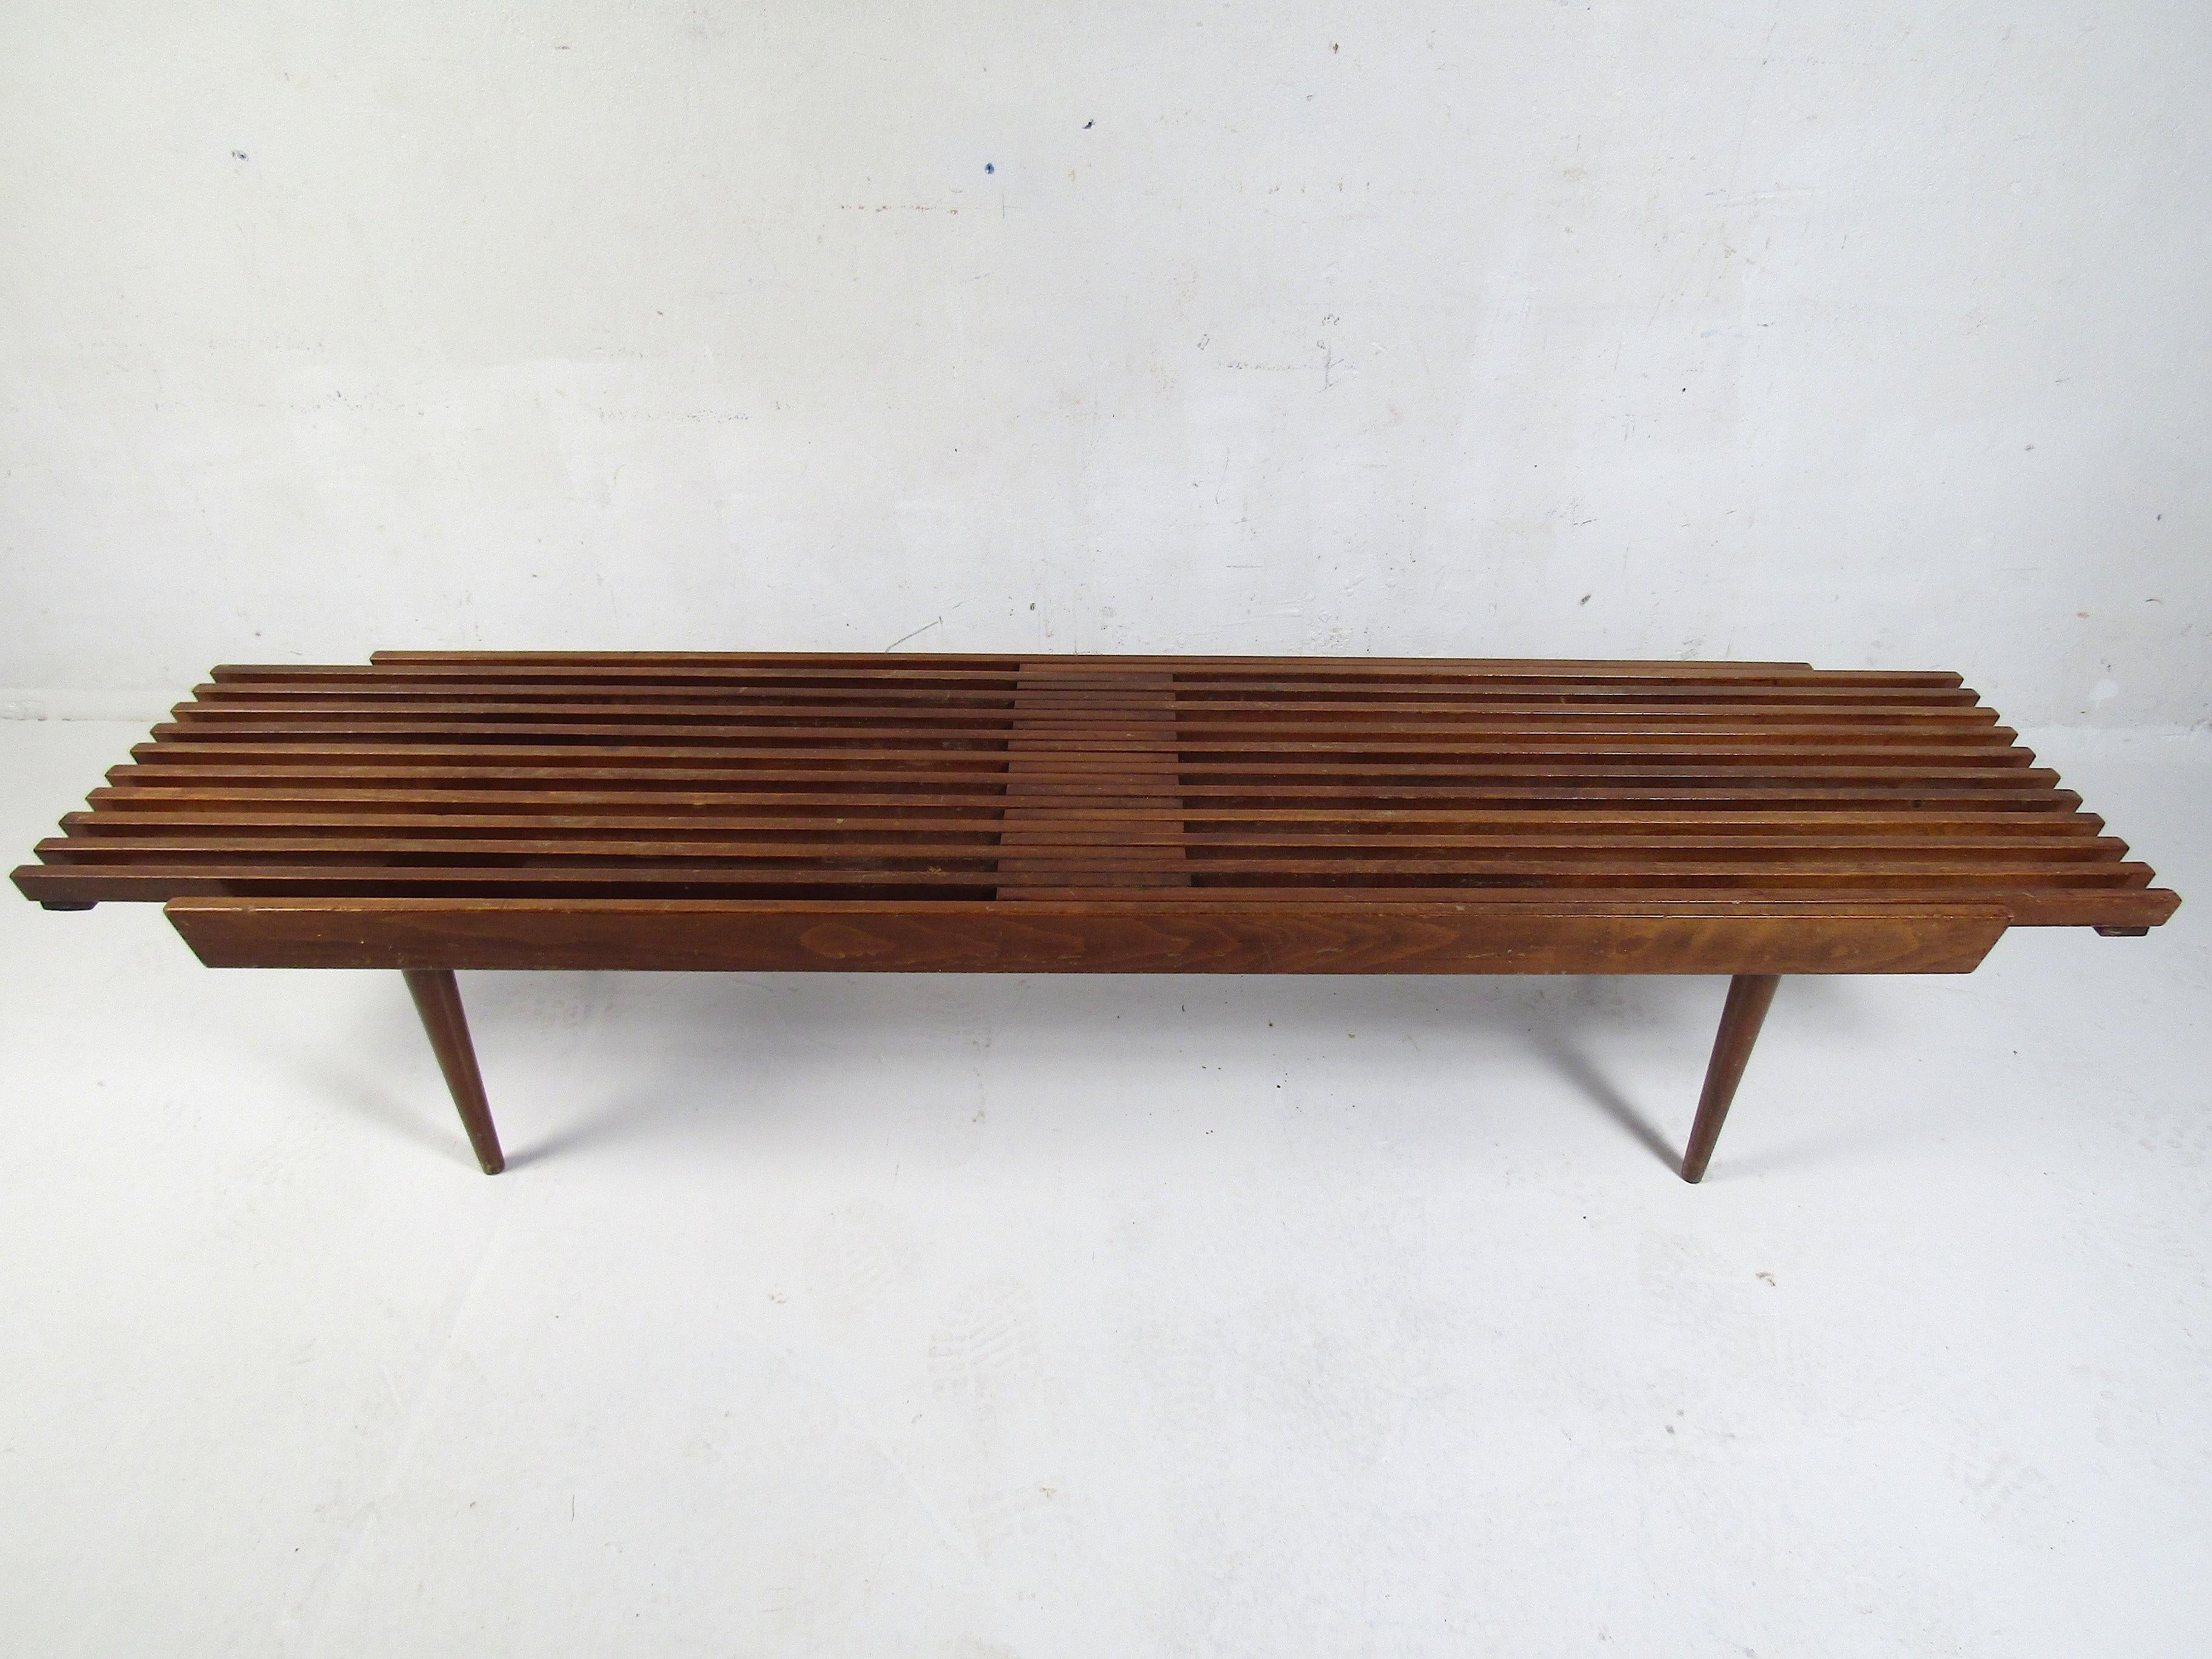 Slovenian Midcentury Expanding Wood-Slat Table For Sale